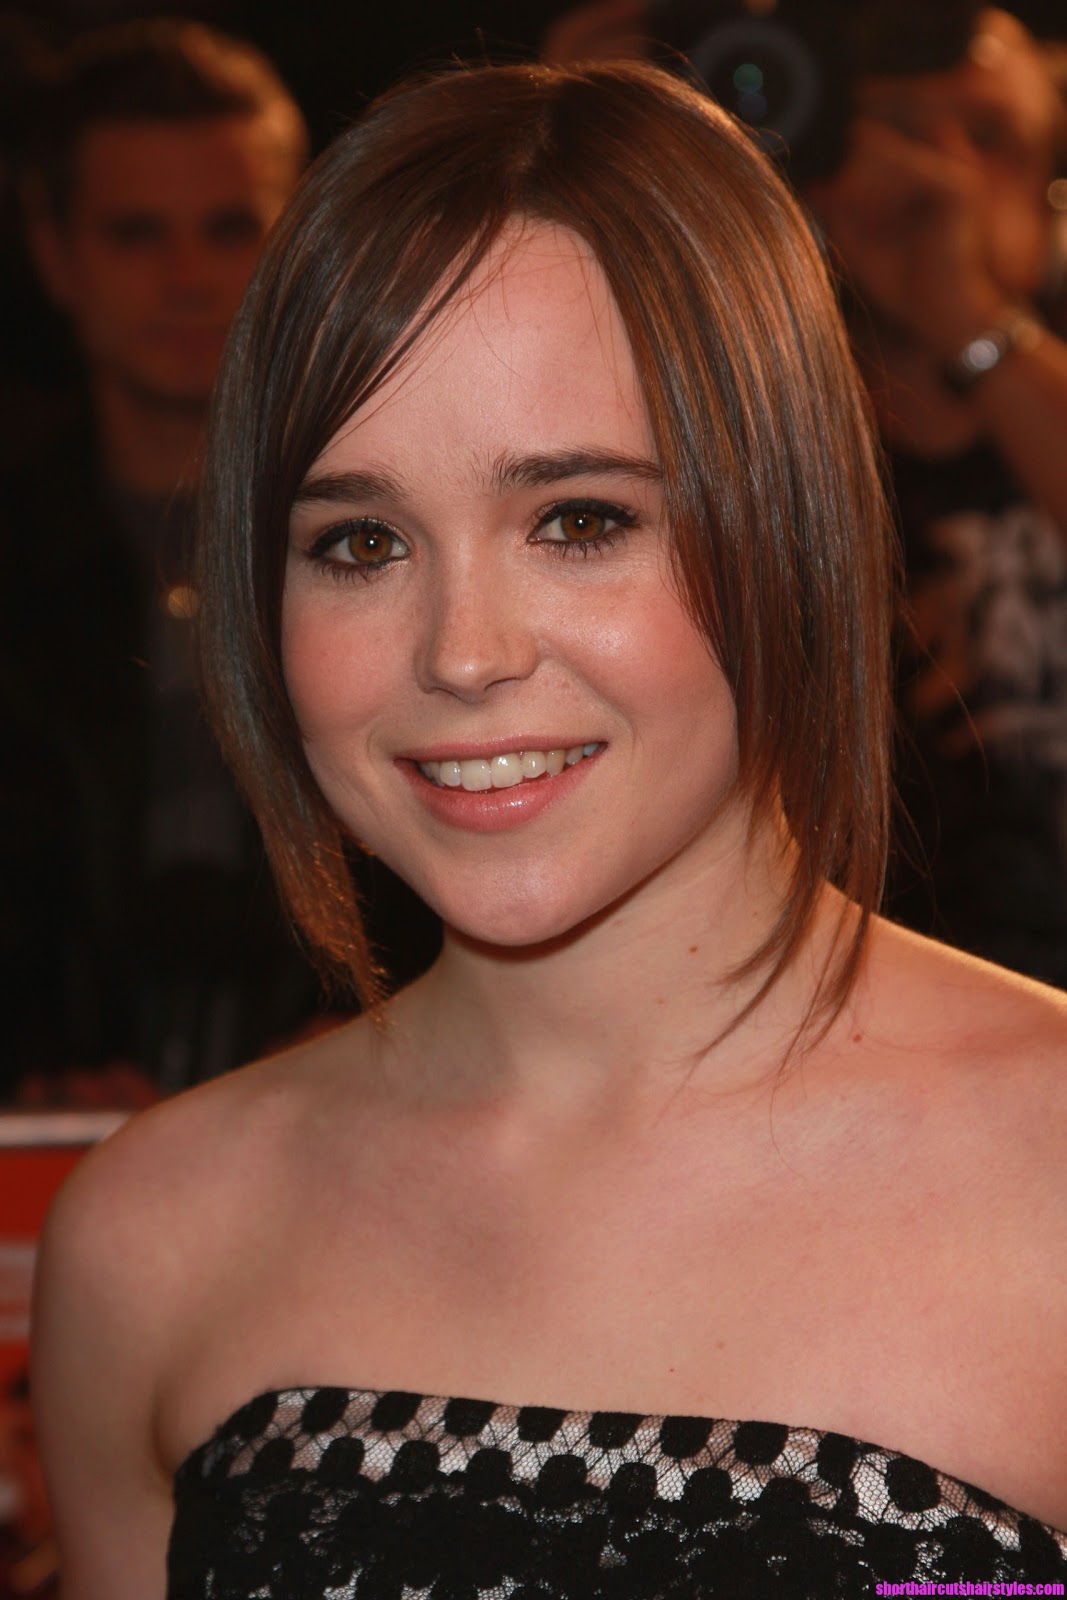 Onfolip: Ellen Page Profile-Bio and Pictures 2012